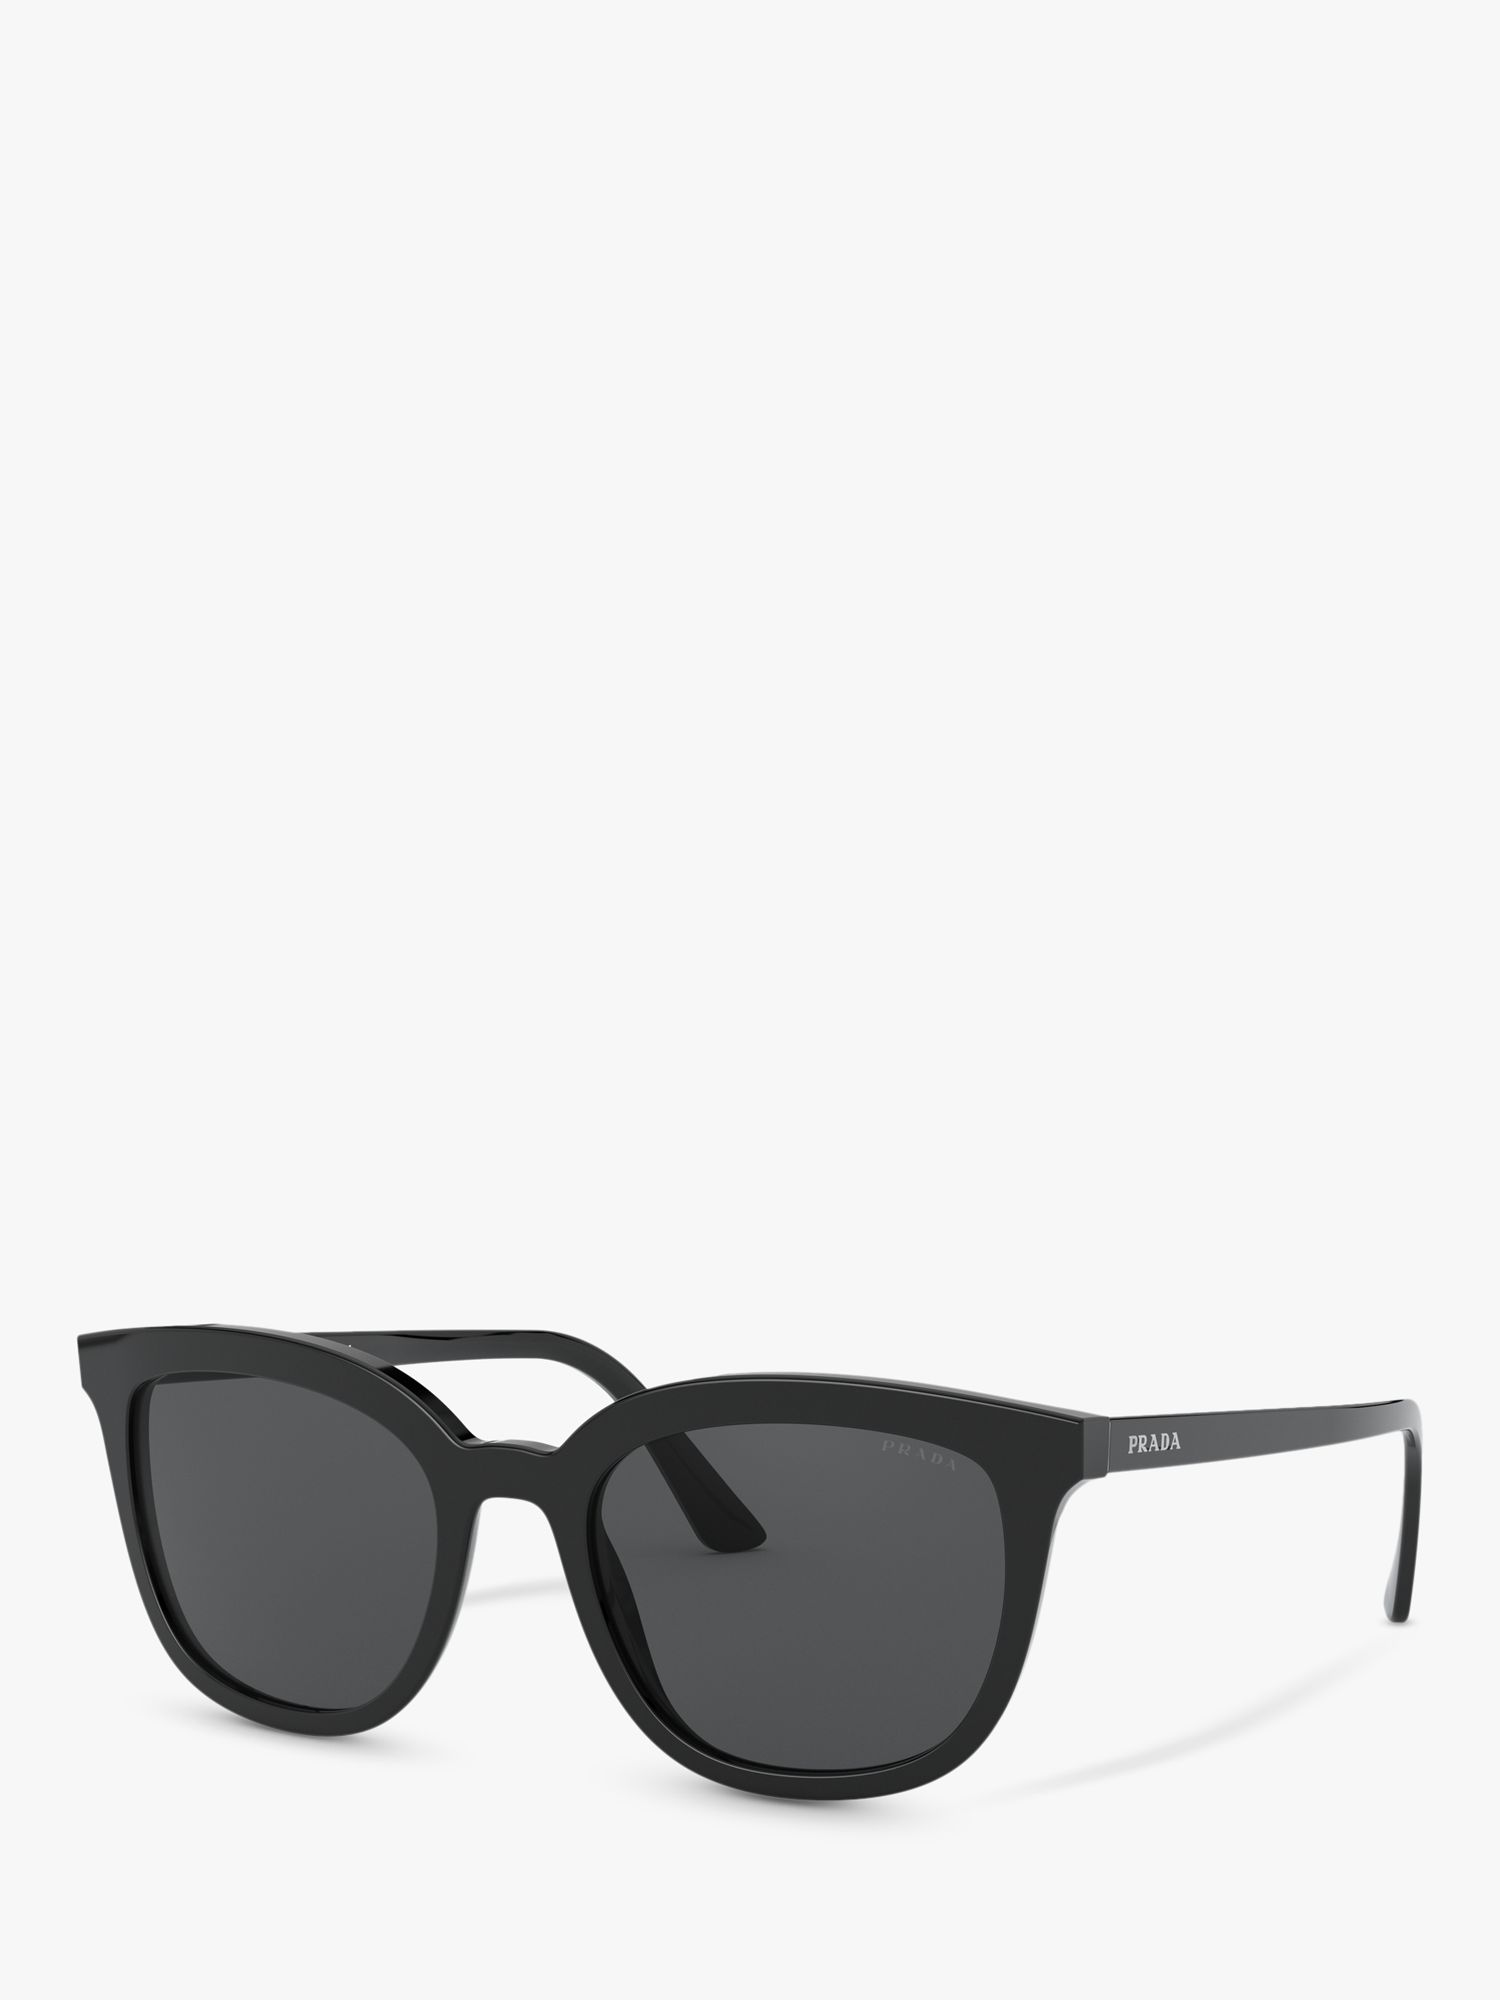 Prada PR 03XS Women's Square Sunglasses, Matte Black/Grey at John Lewis &  Partners